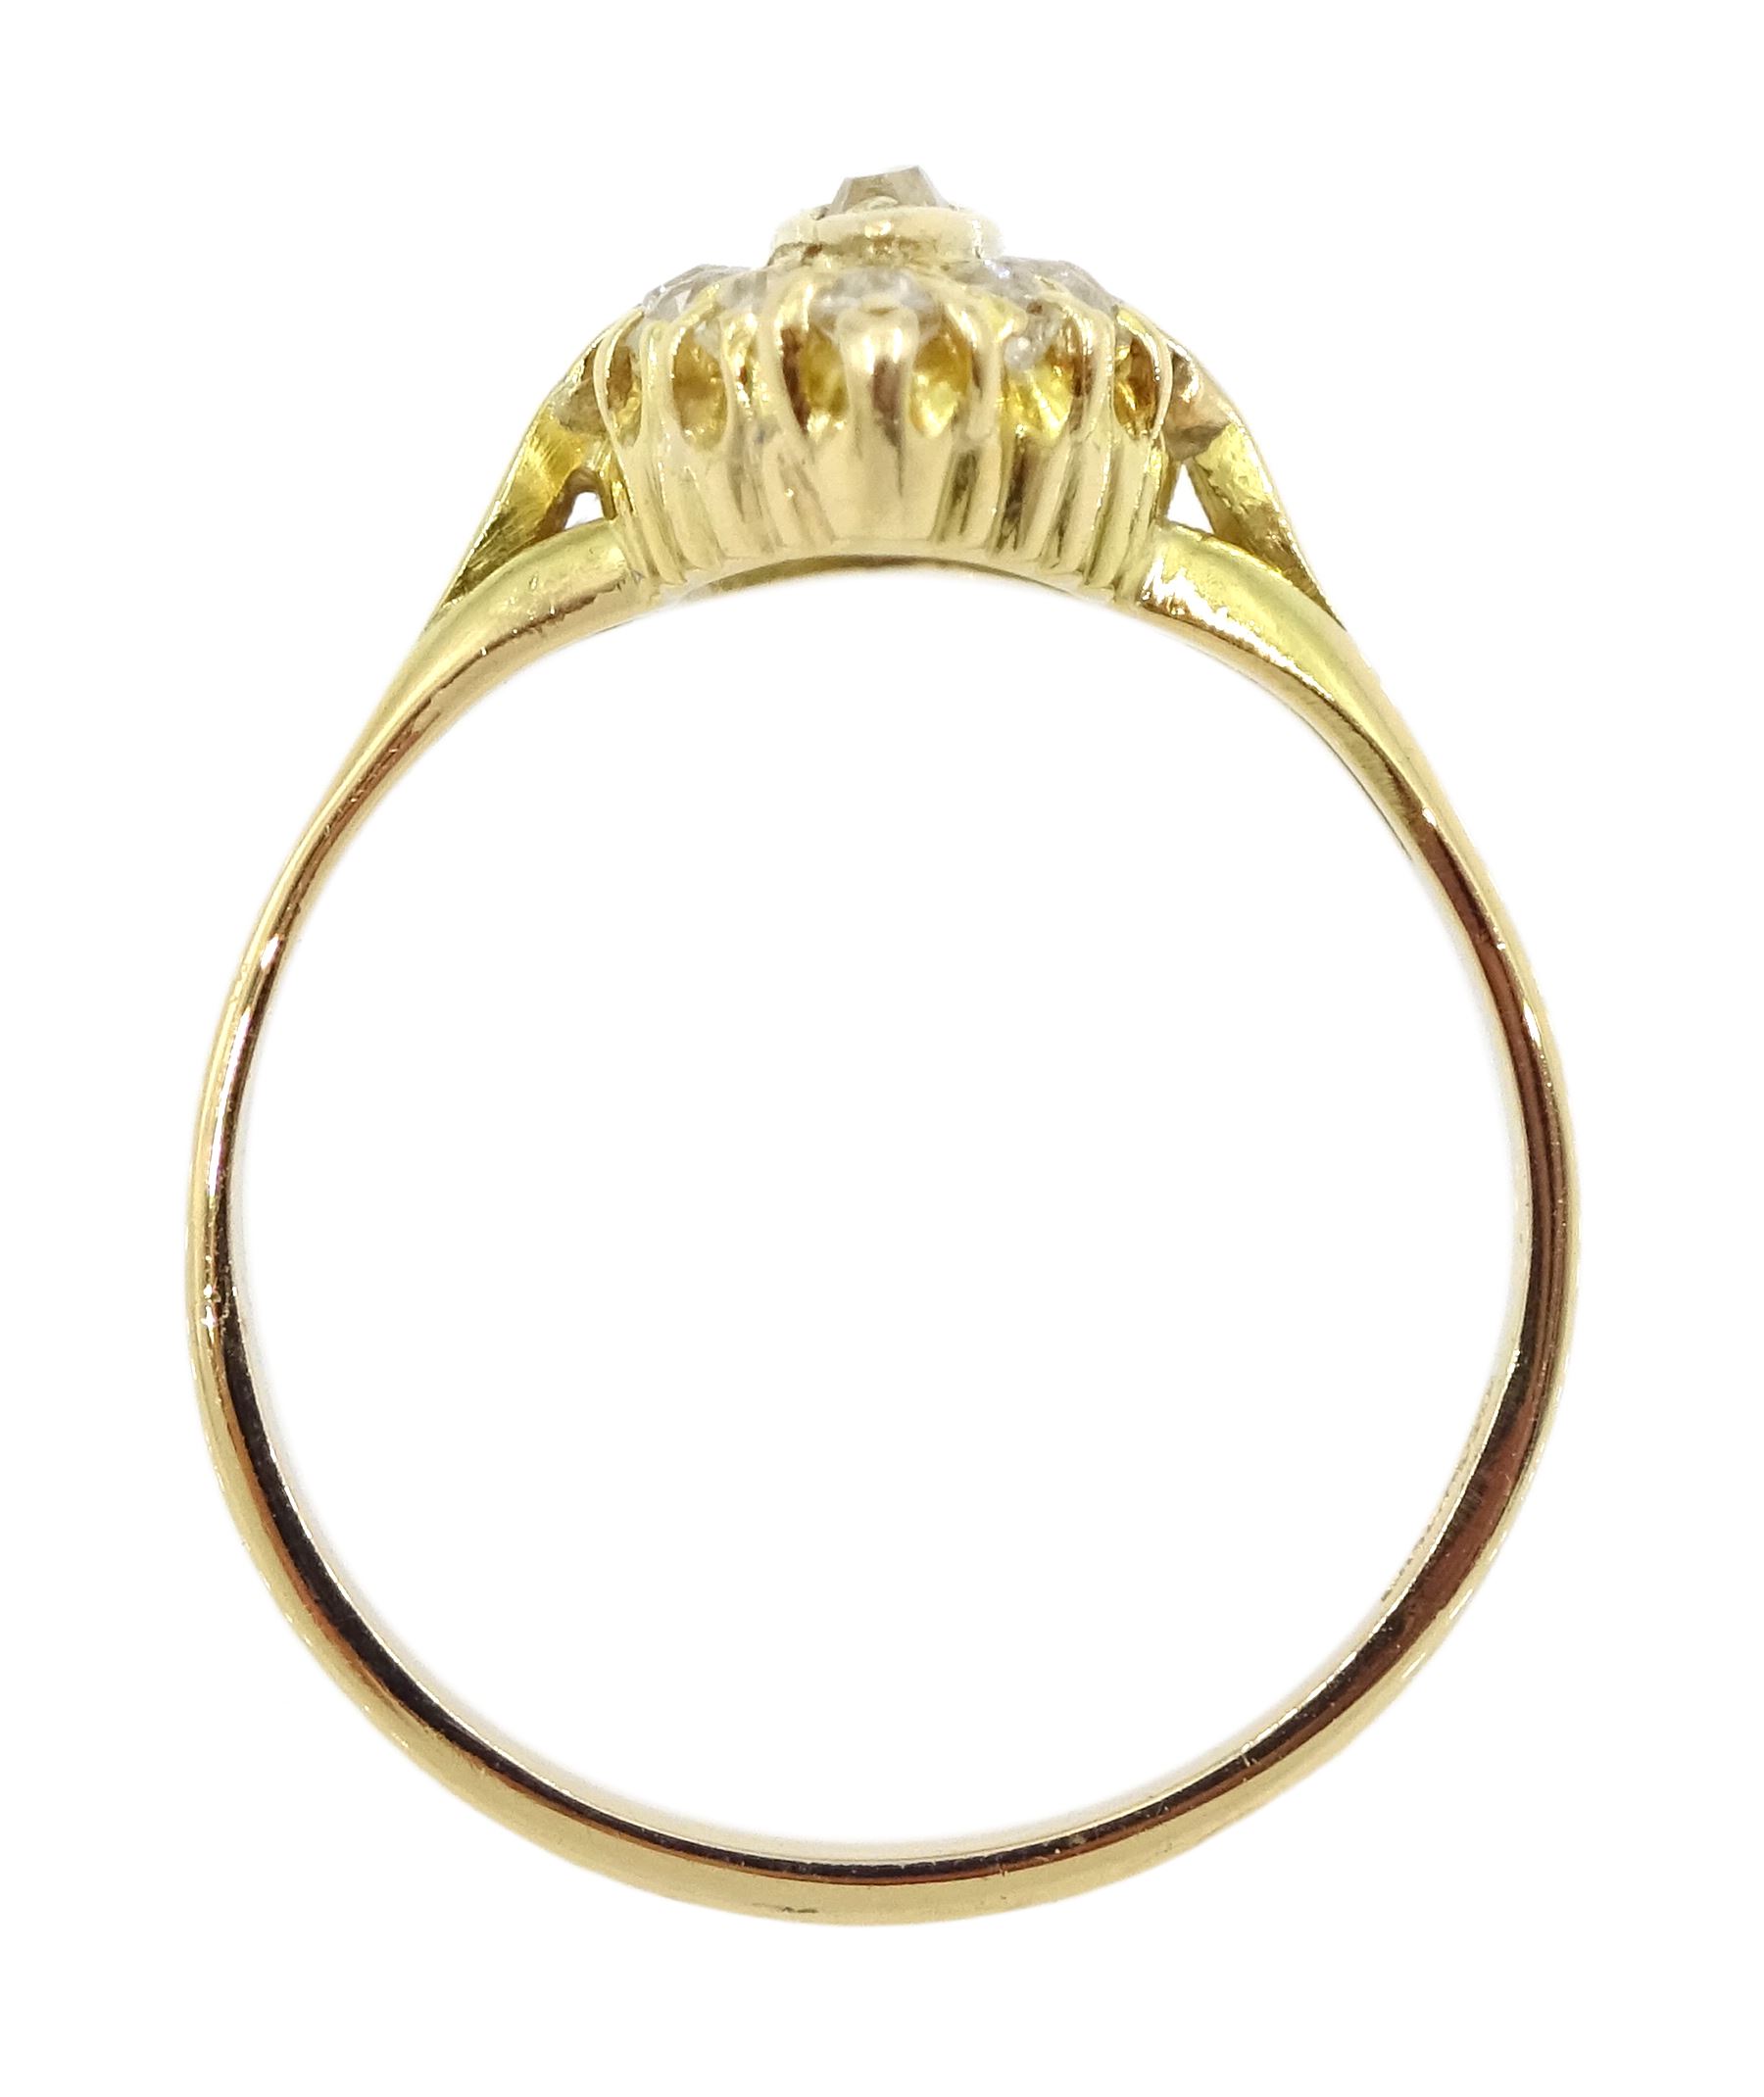 18ct gold diamond set marquise shaped ring - Image 4 of 4